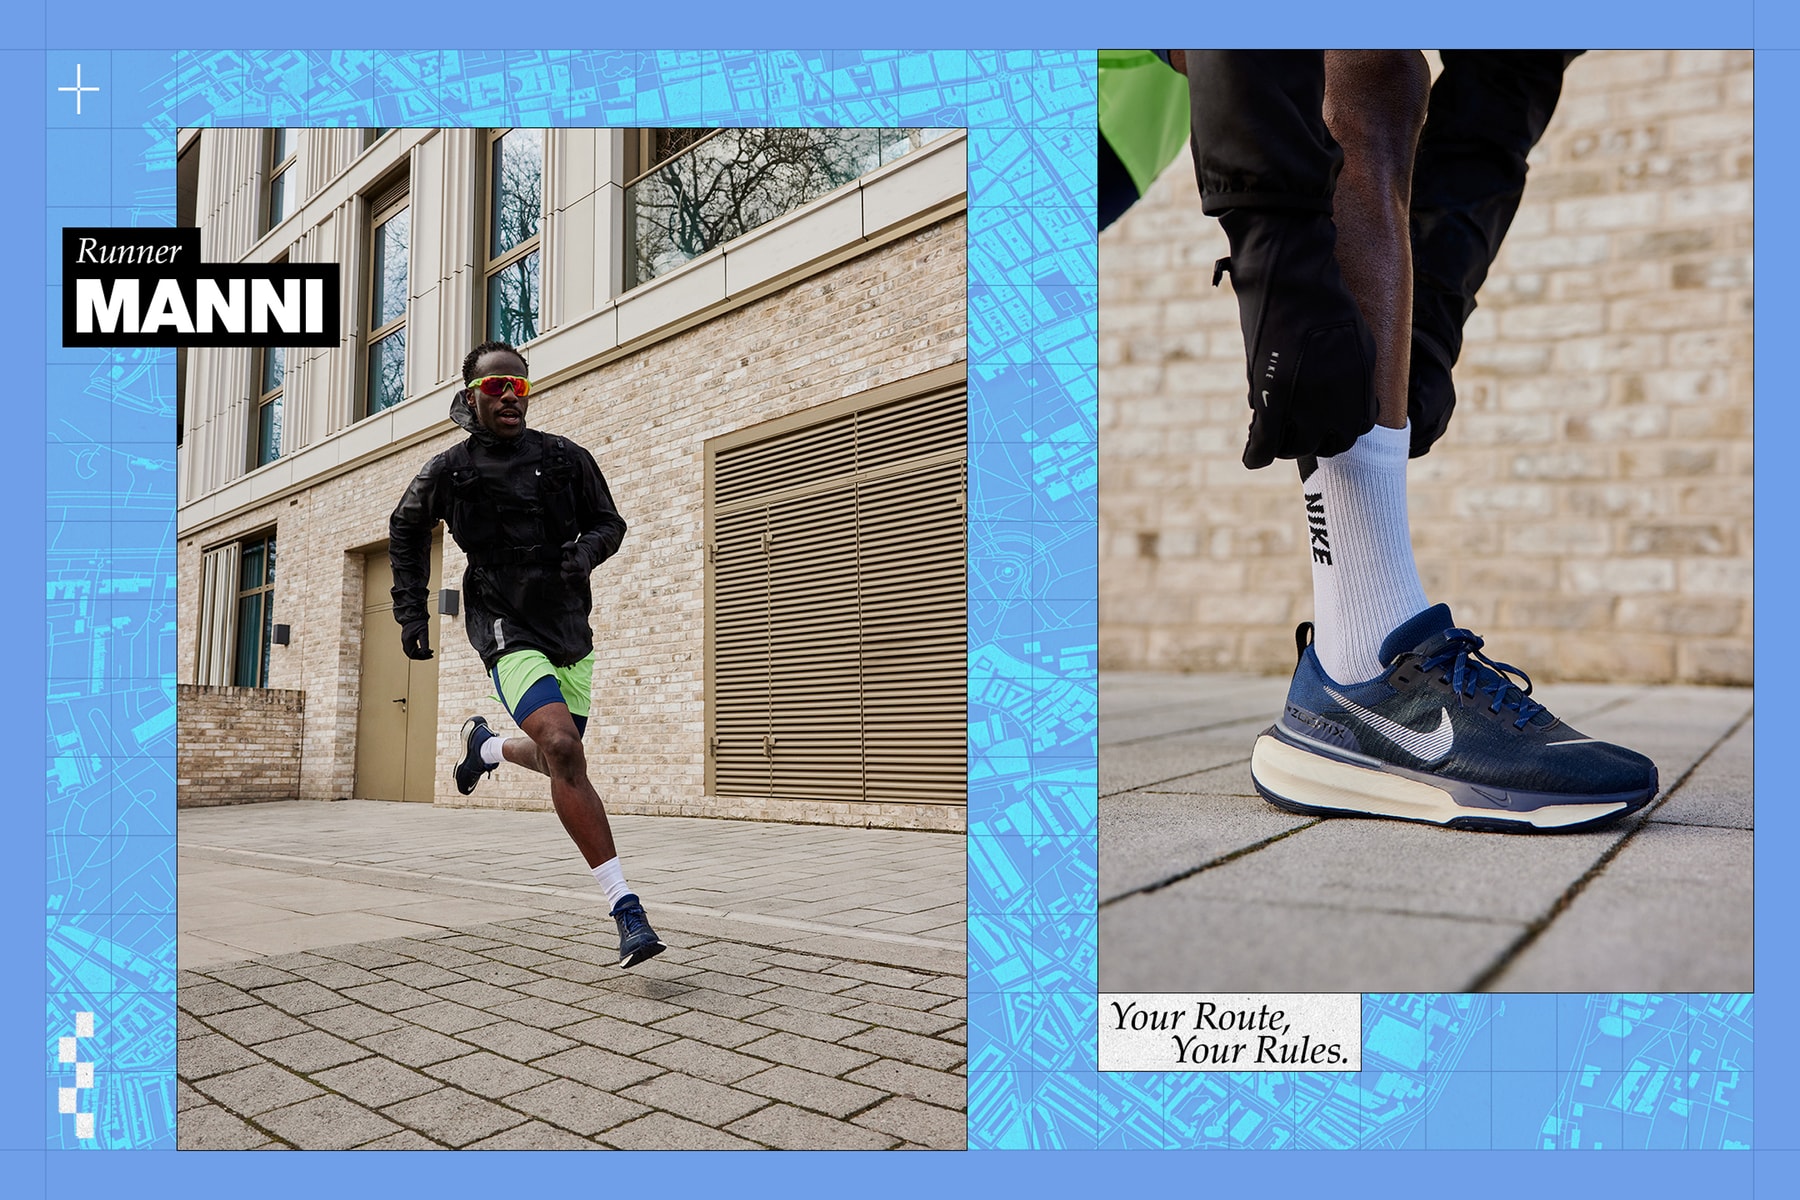 Manni Ovola Encounters New Possibilities Nike's "InvincibleGPS"